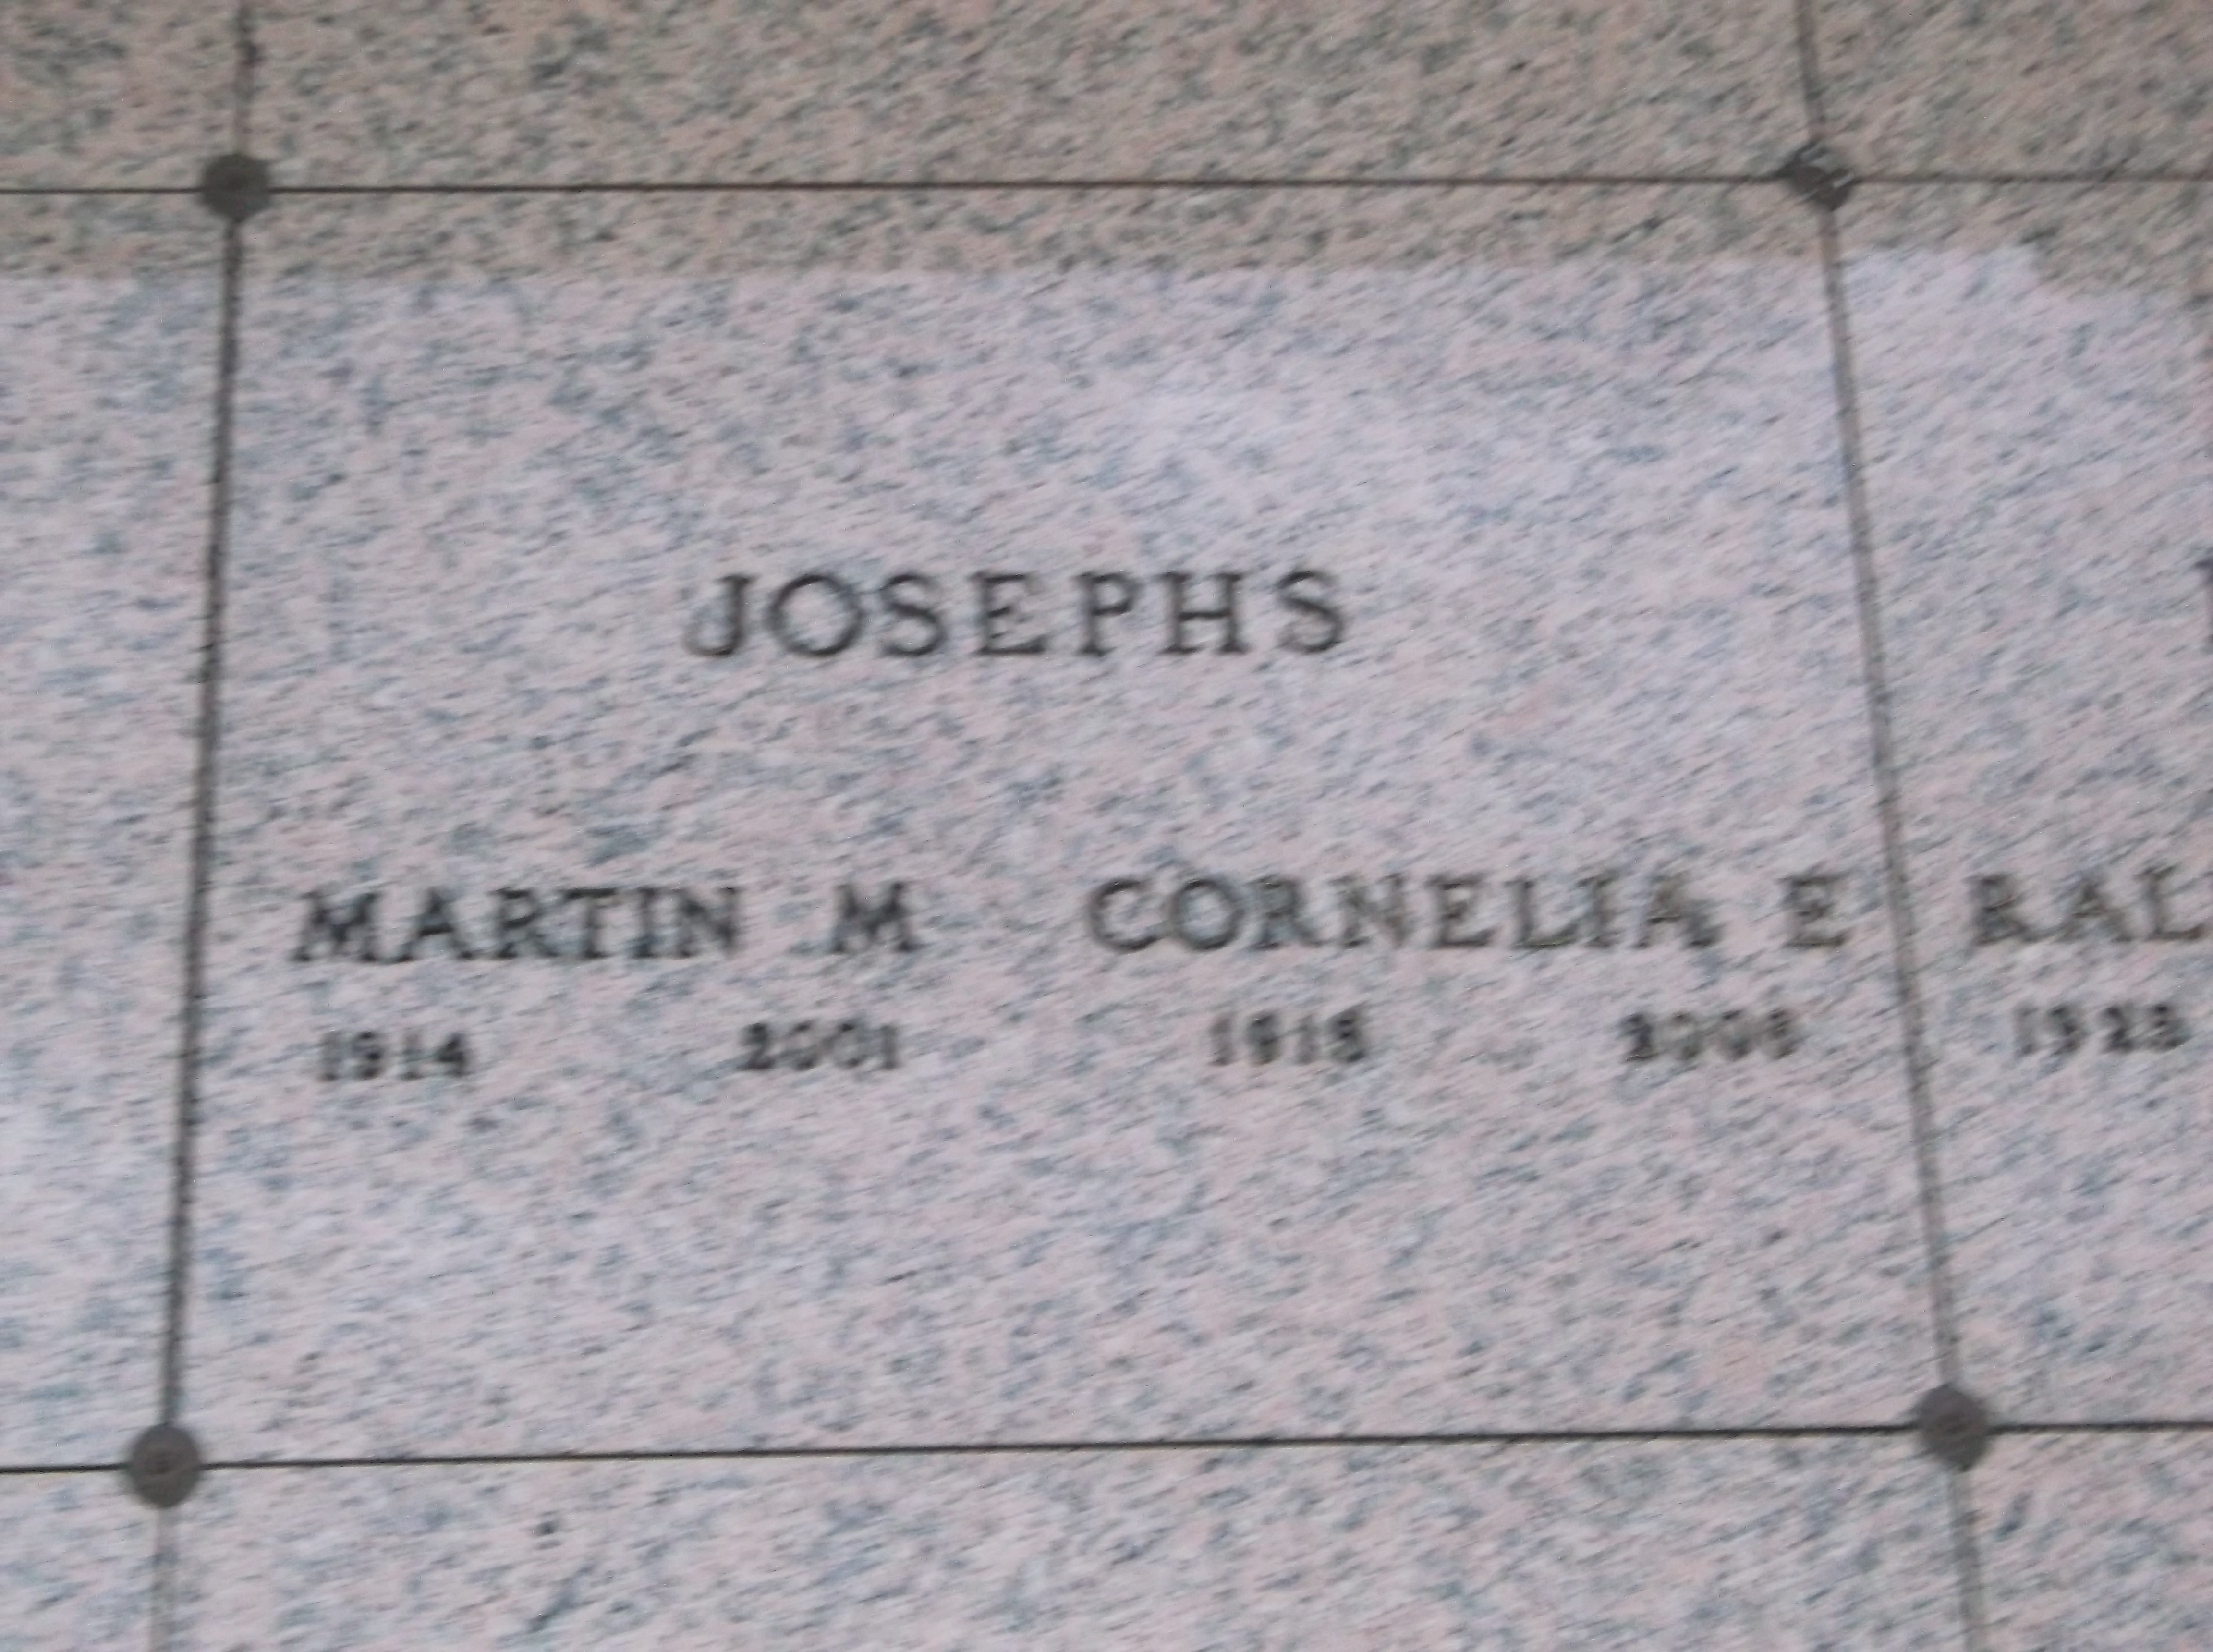 Martin M Josephs